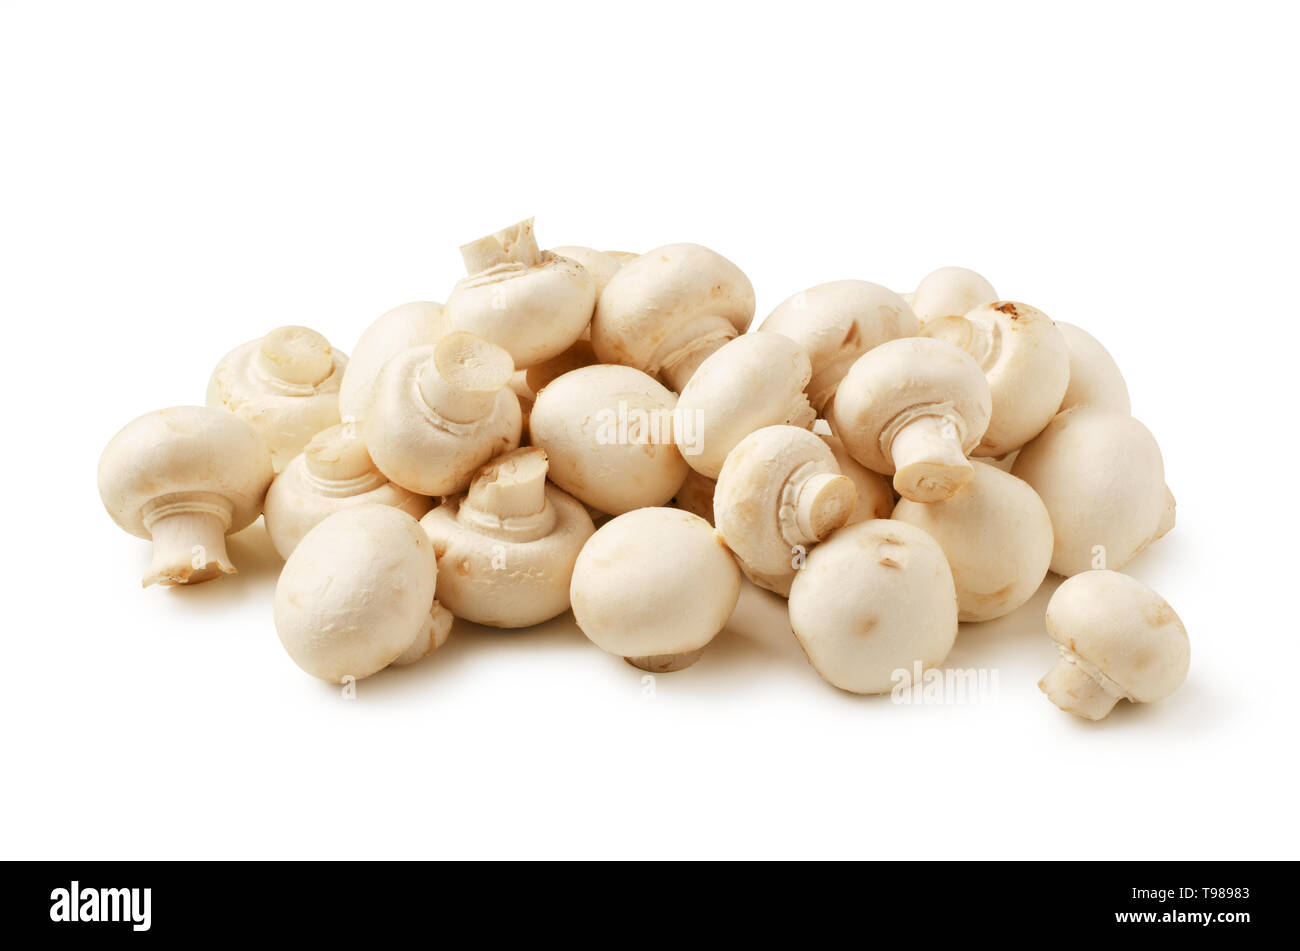 Mushrooms champignon isolated on white background Stock Photo